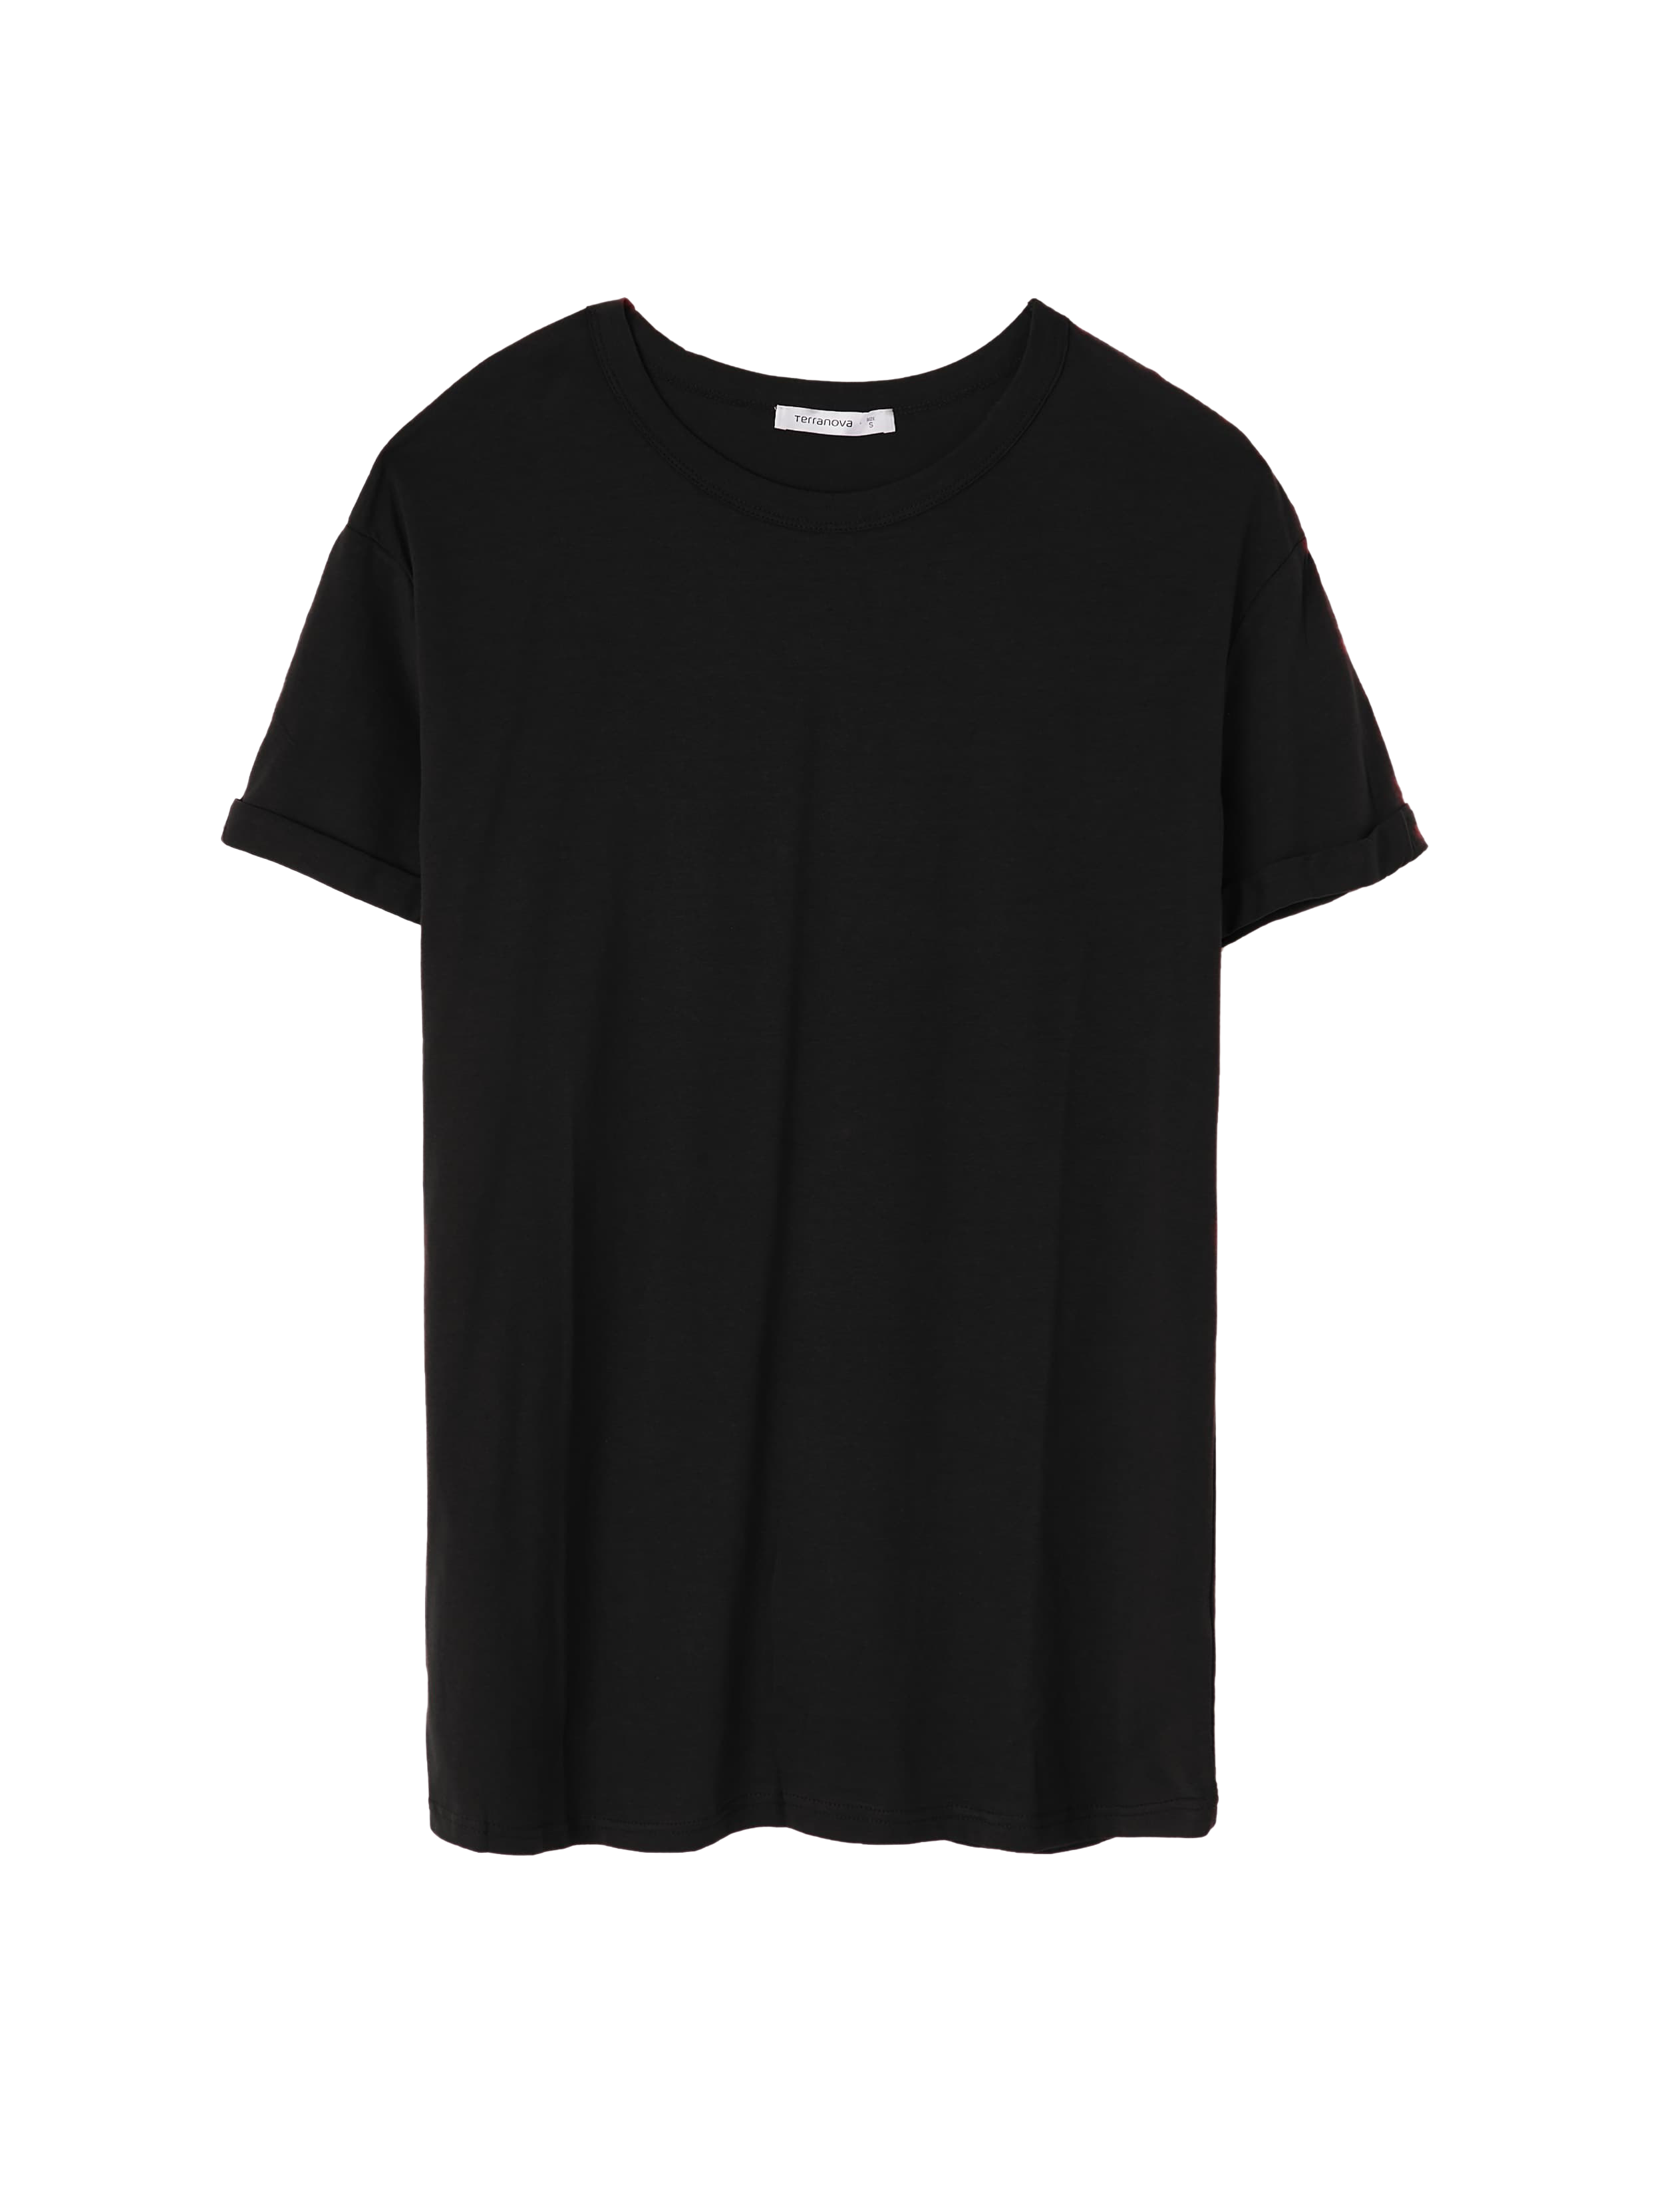 Plain Black T-Shirt PNG Pic